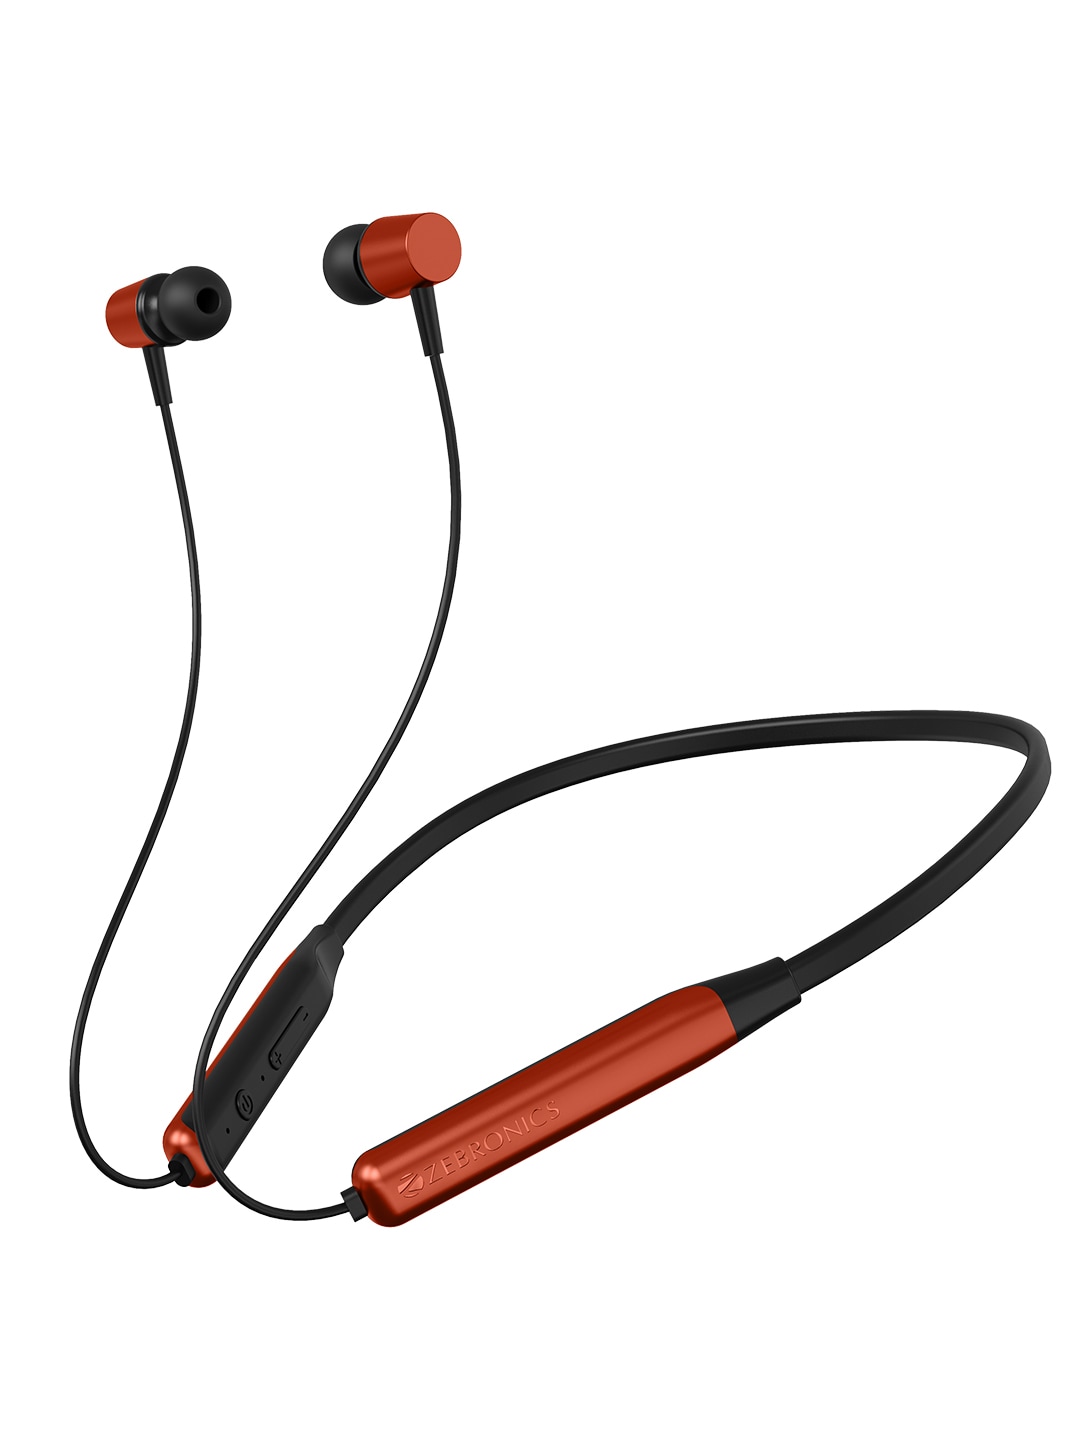 ZEBRONICS Zeb Evolve Wireless Bluetooth in Ear Neckband Earphone with Mic - Orange Price in India